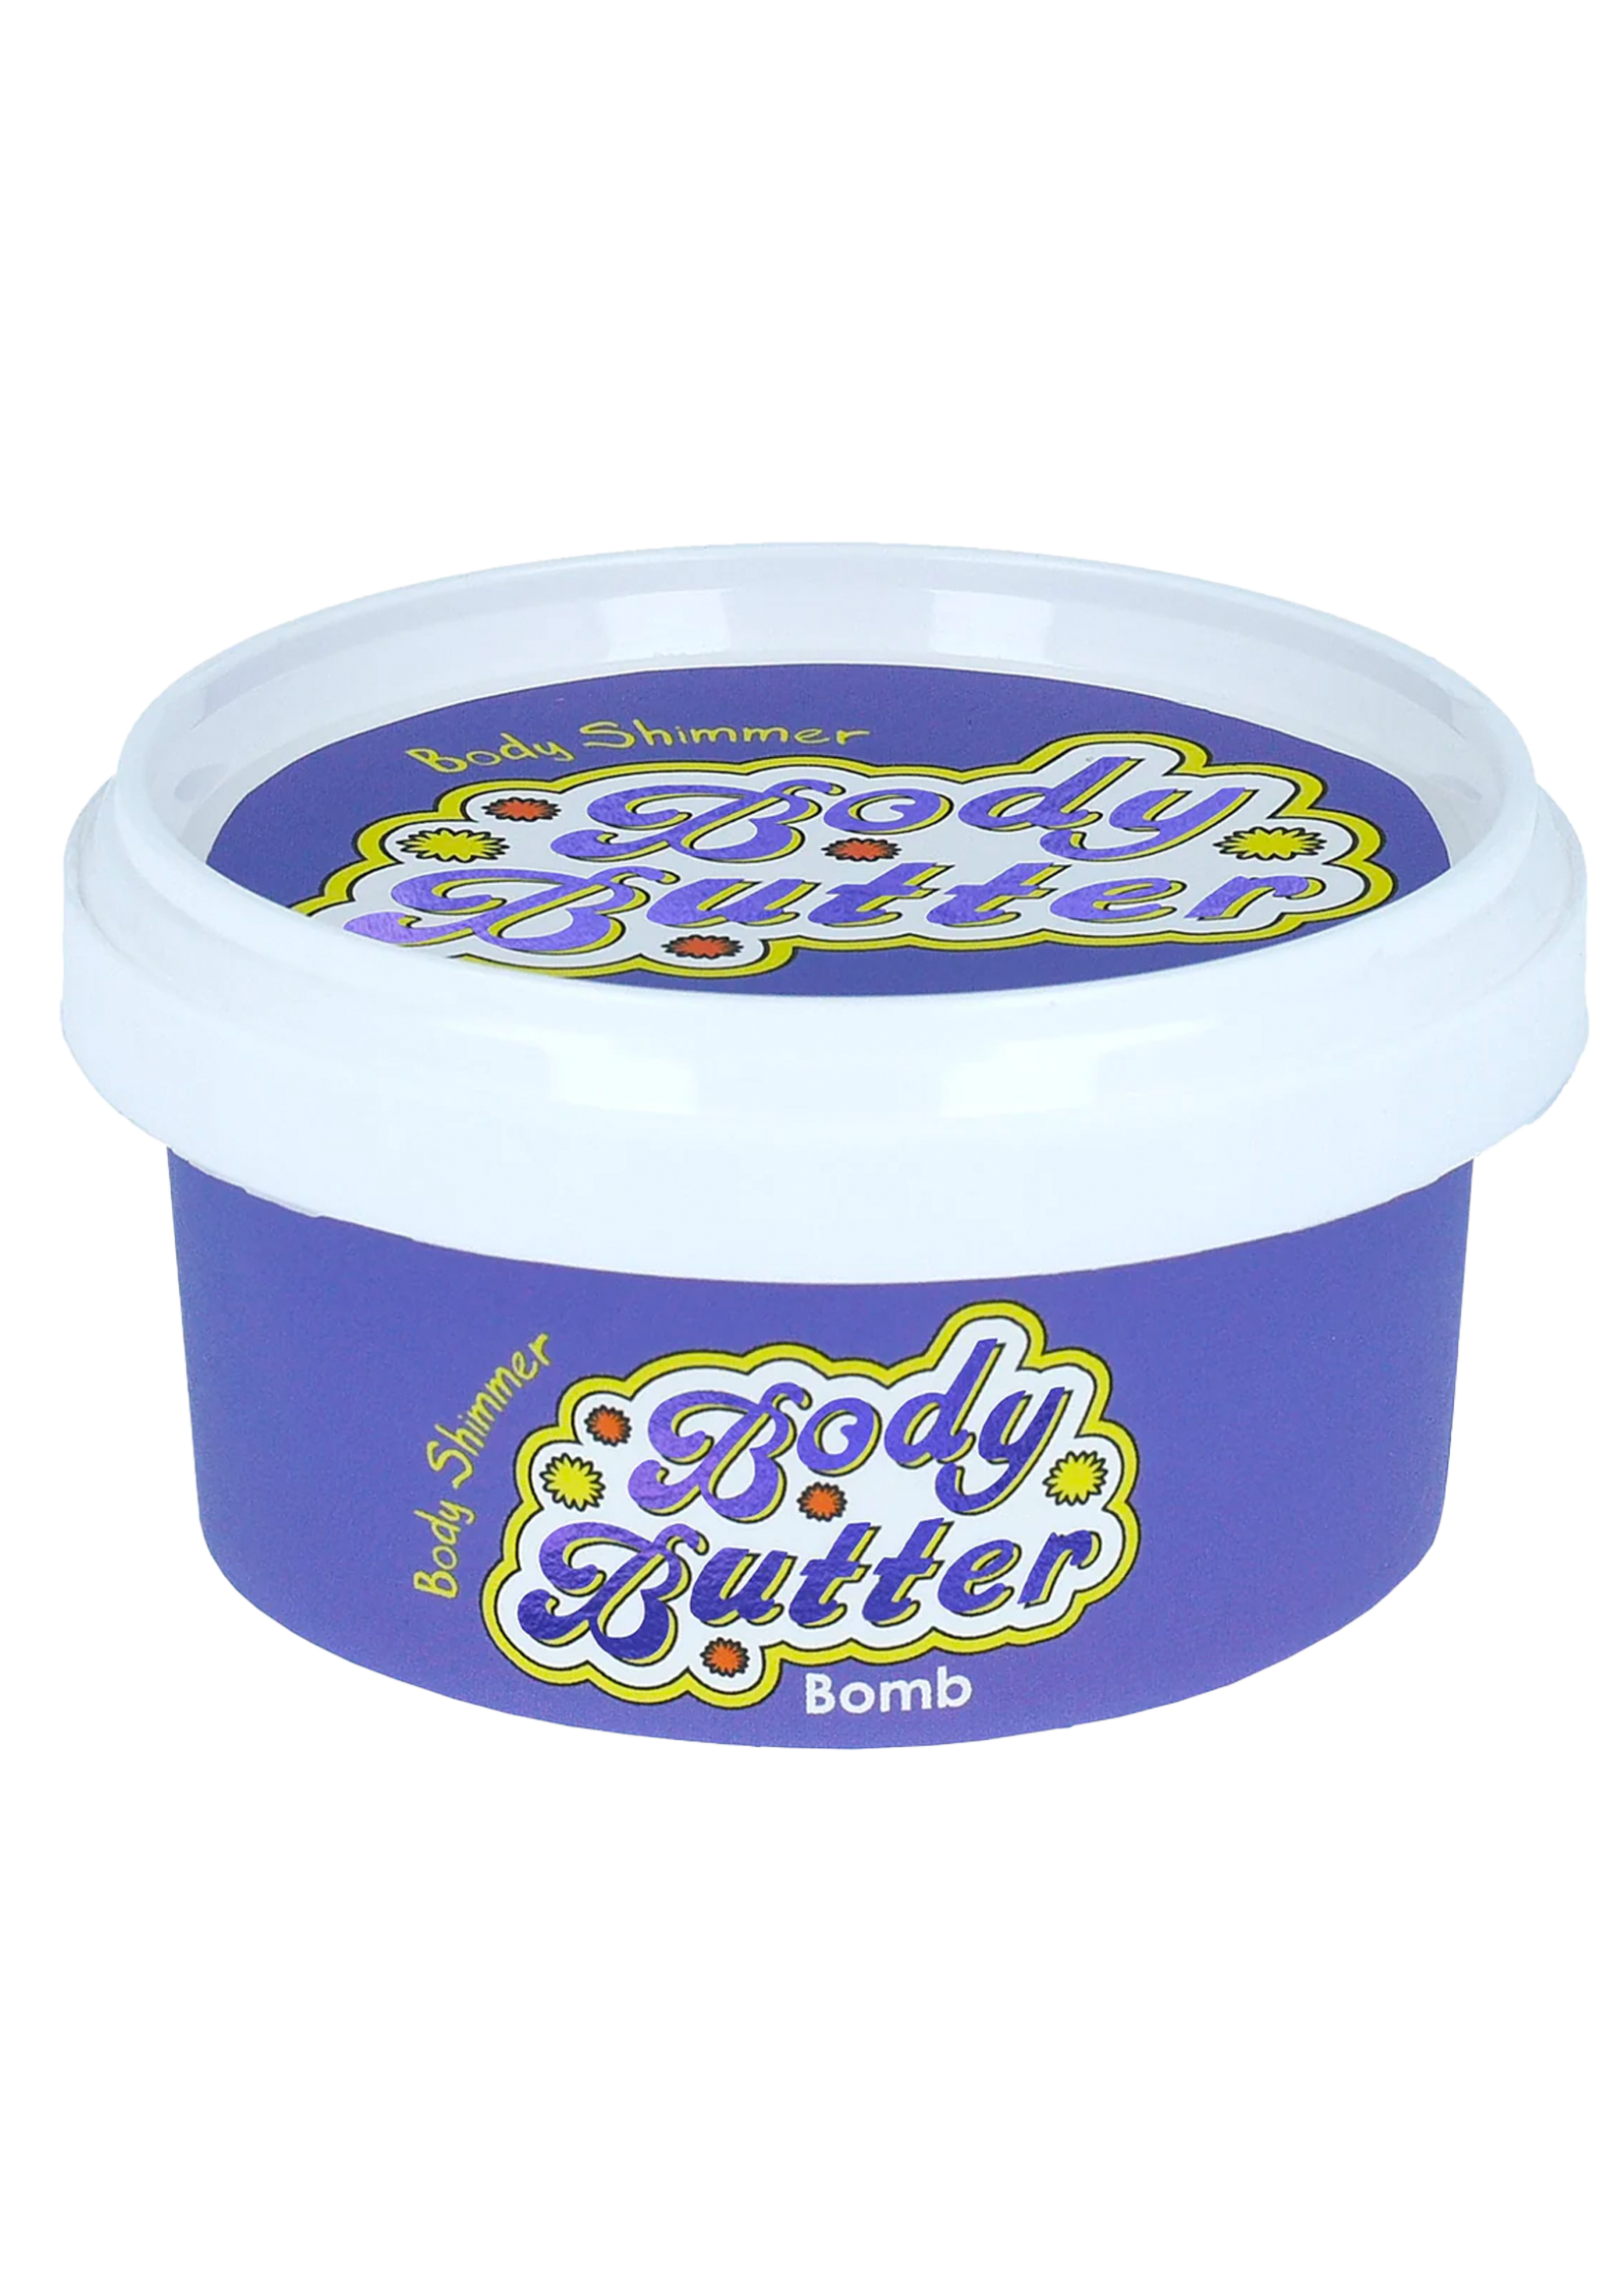 Bomb Cosmetics Body shimmer body butter